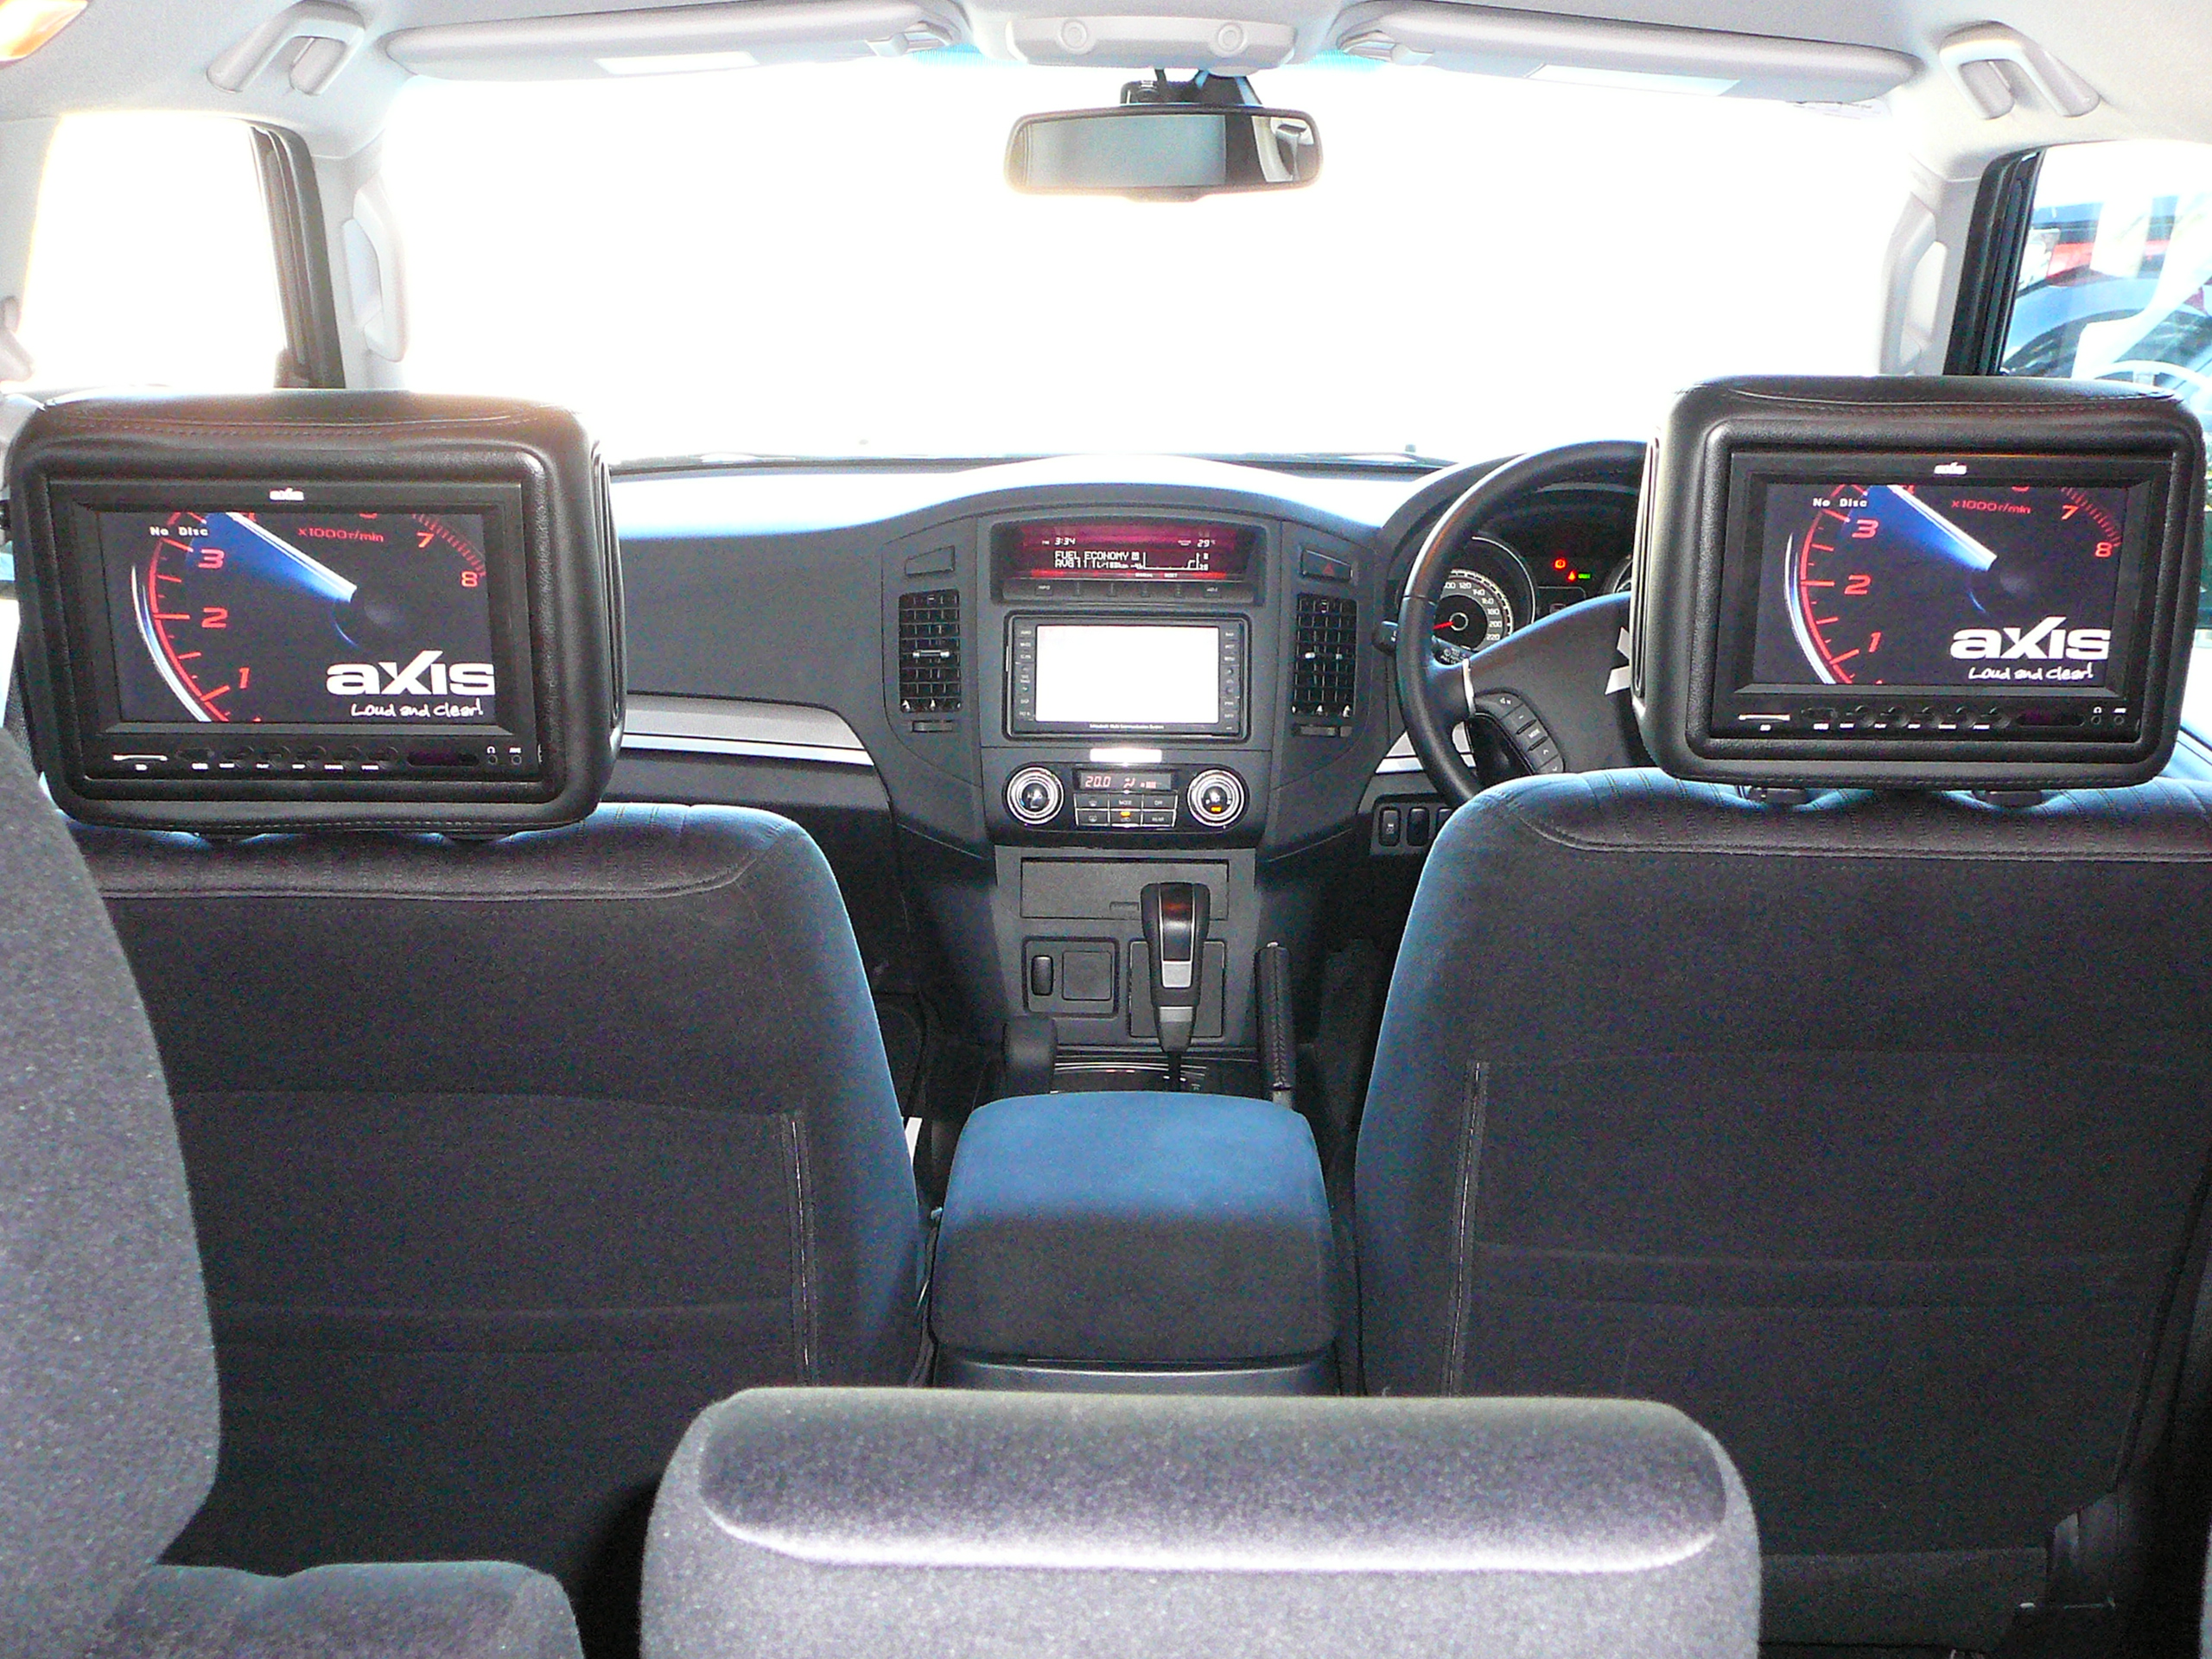 Mitsubishi Pajero, Rear Seat DVD Head Rest Monitors